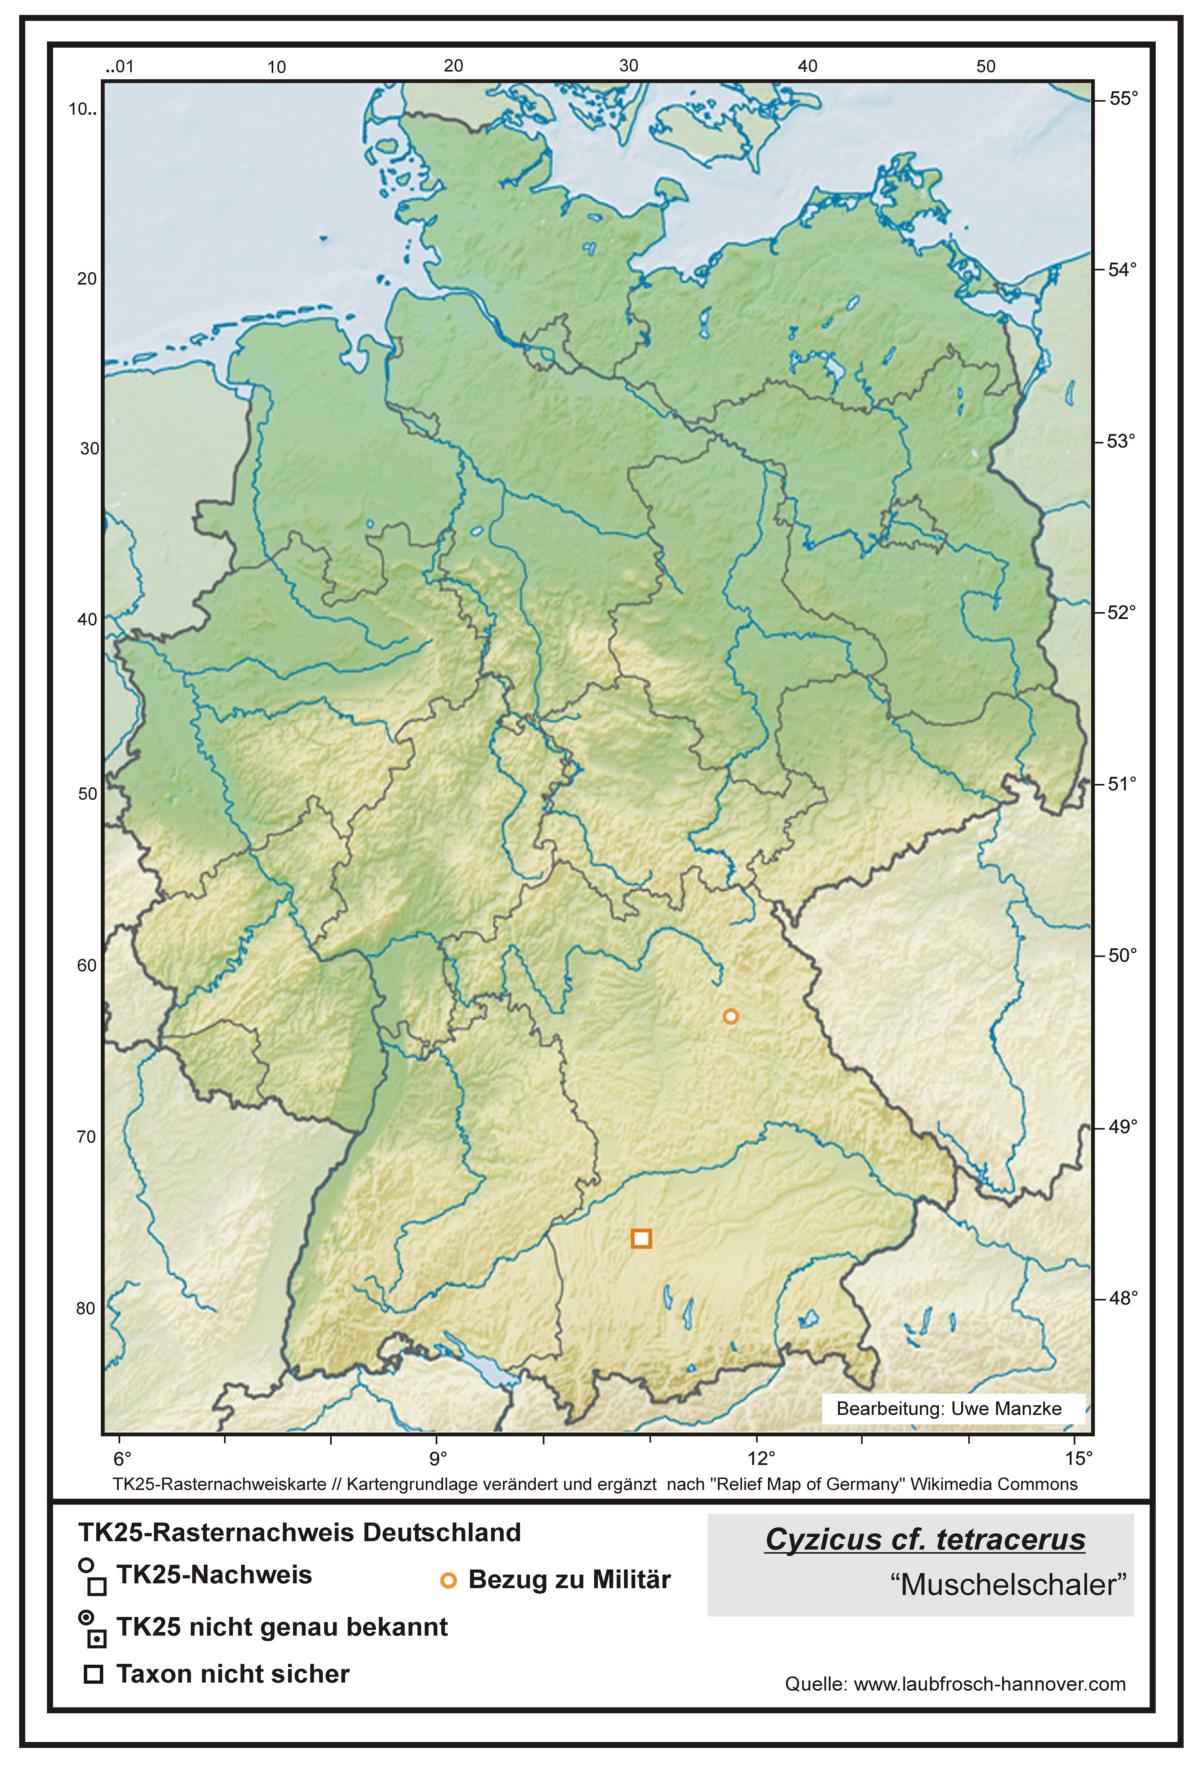 Cyzicus cf. tetracerus TK25-Rasternachweiskarte Deutschland, Bearbeitung Uwe Manzke; Kartengrundlage: verändert n. Relief Map of Germany Wikimedia Commons https://commons.wikimedia.org/wiki/File:Relief_Map_of_Germany.svg